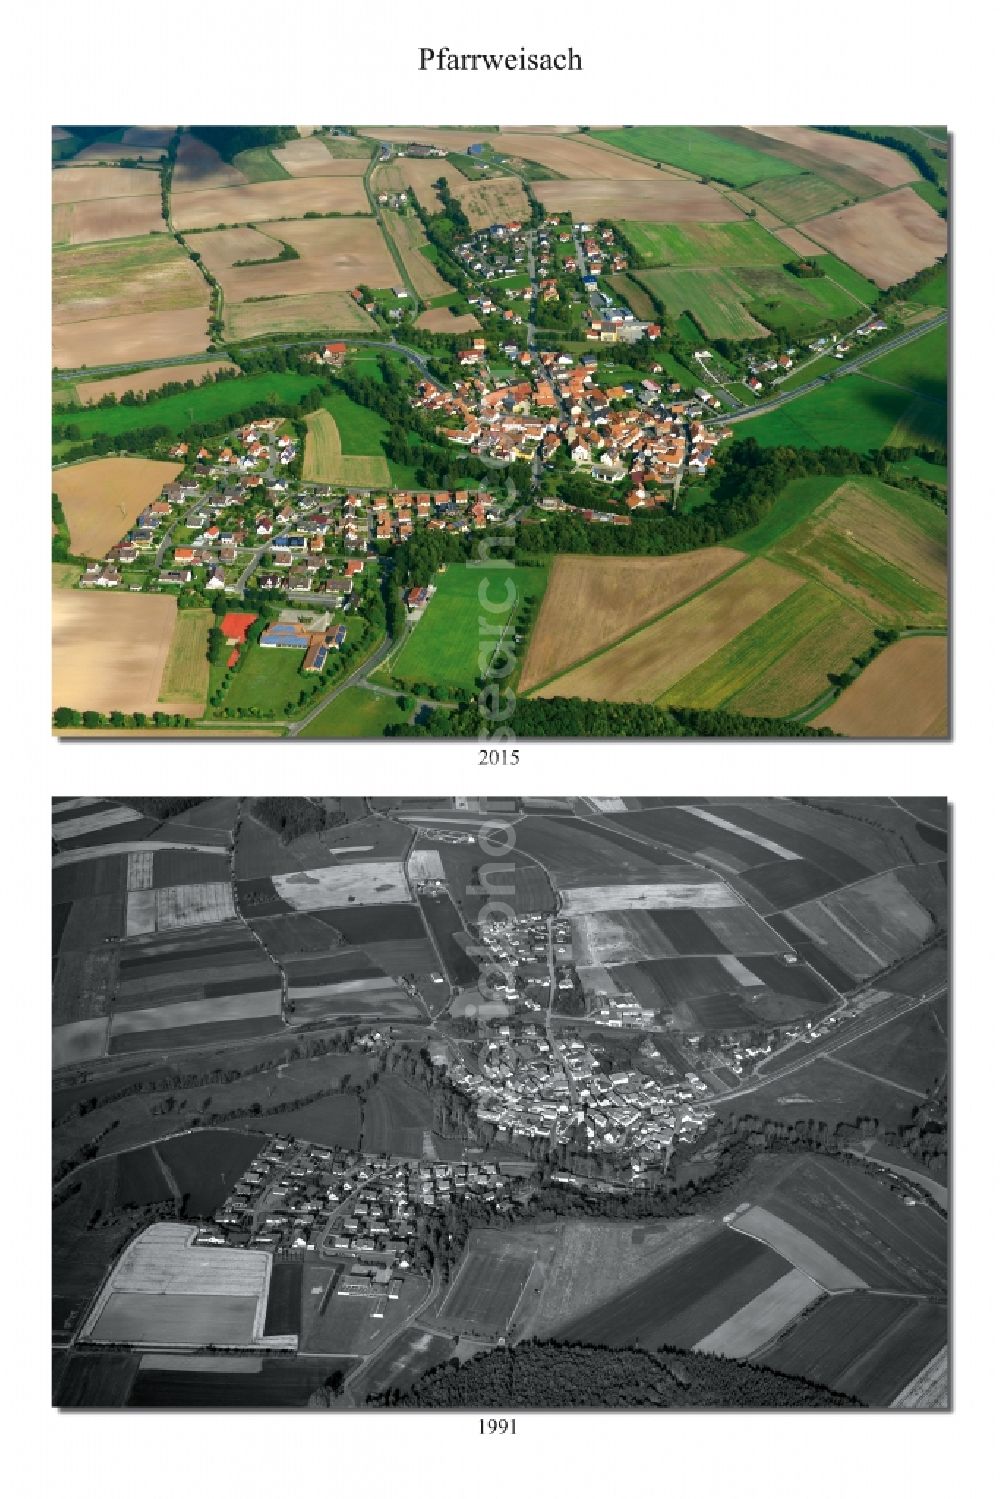 Aerial photograph Pfarrweisach - 1991 and 2015 village - view change of Pfarrweisach in the state Bavaria